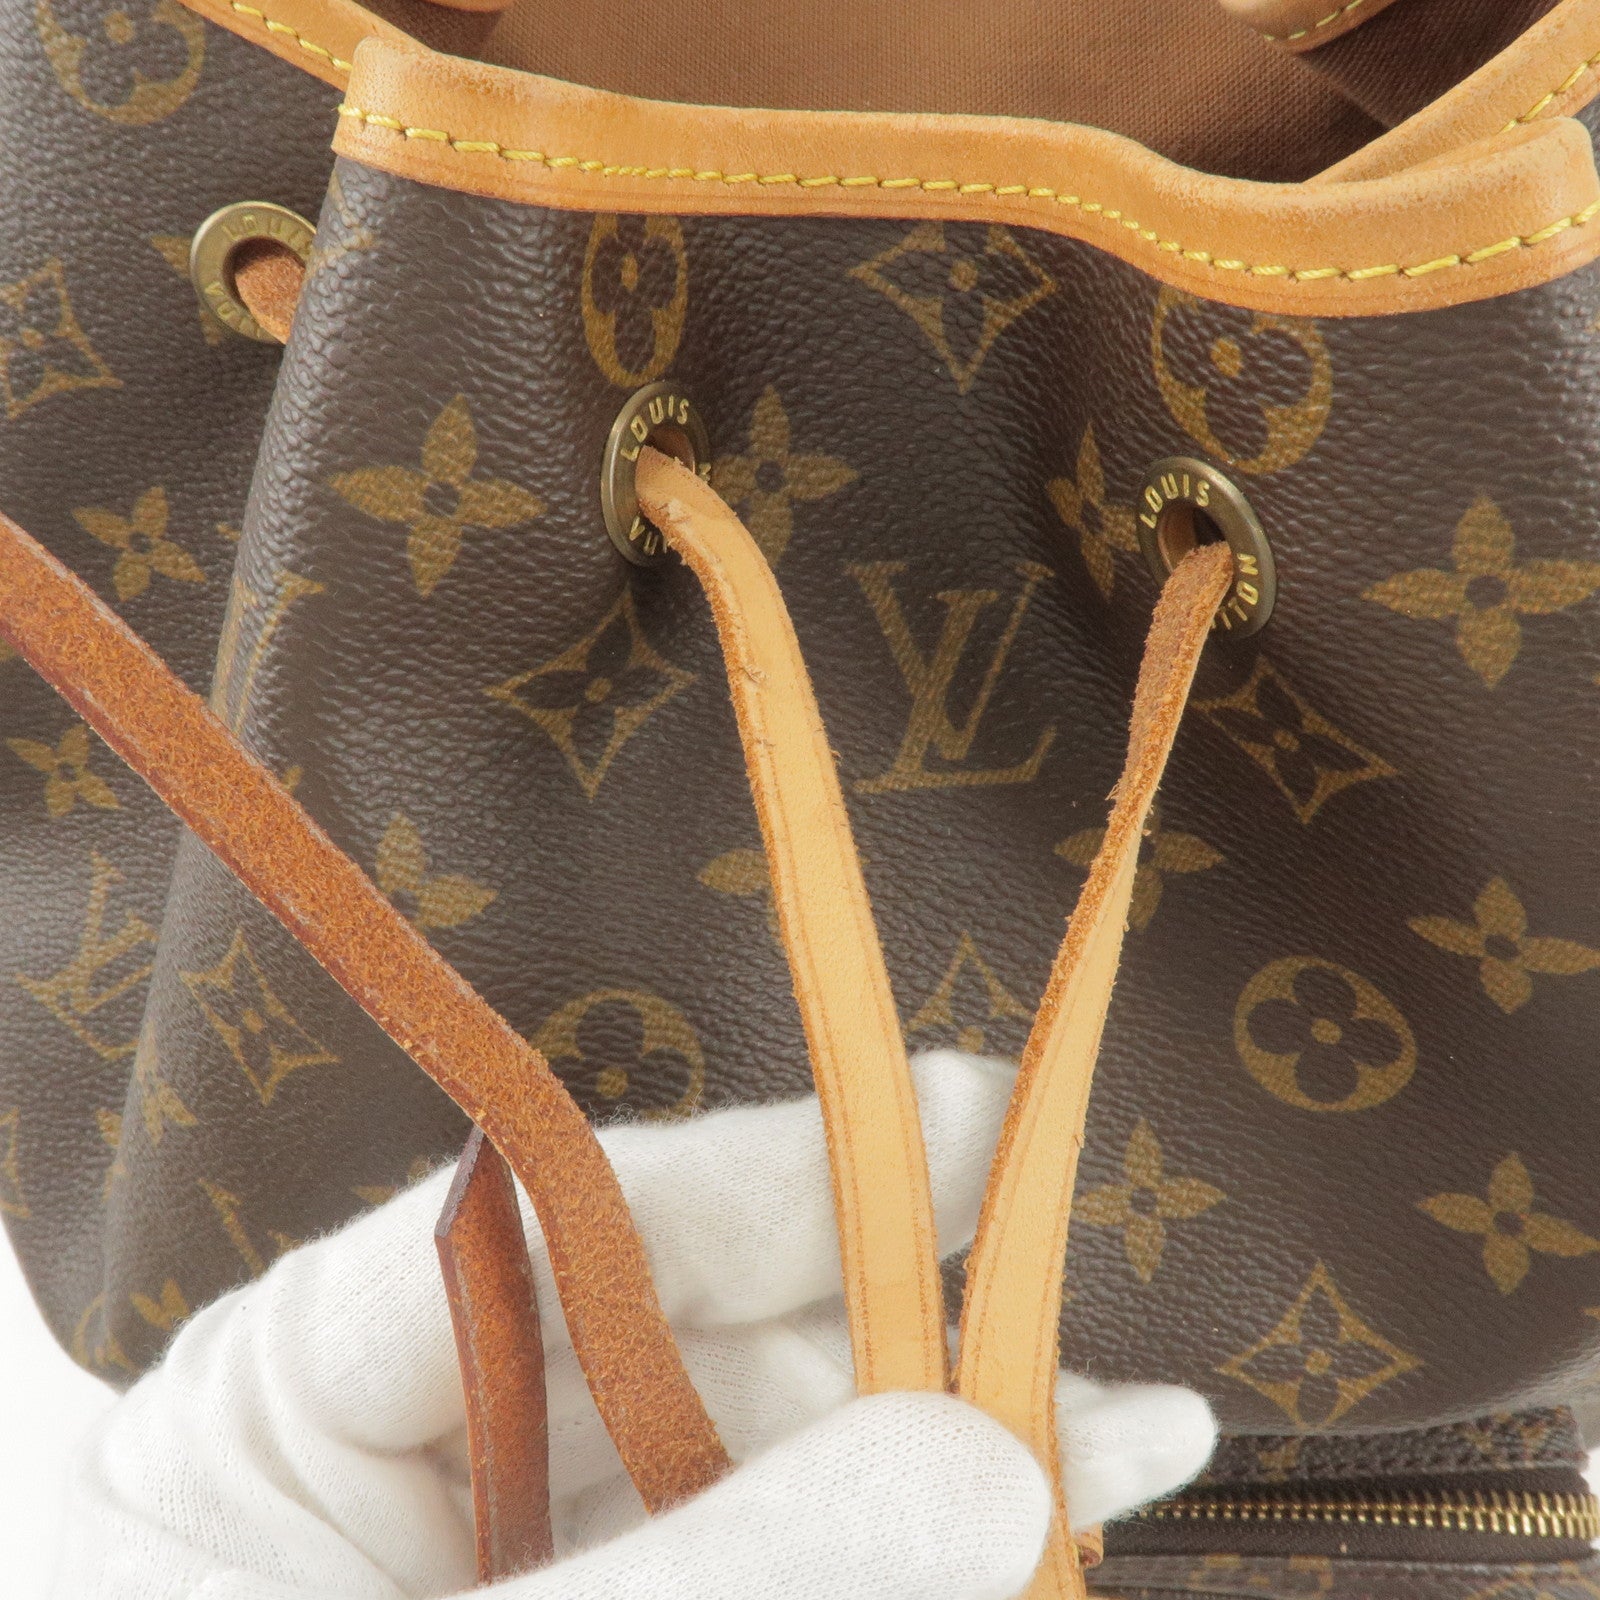 Louis Vuitton 2006 Pre-owned Nile Shoulder Bag - Brown